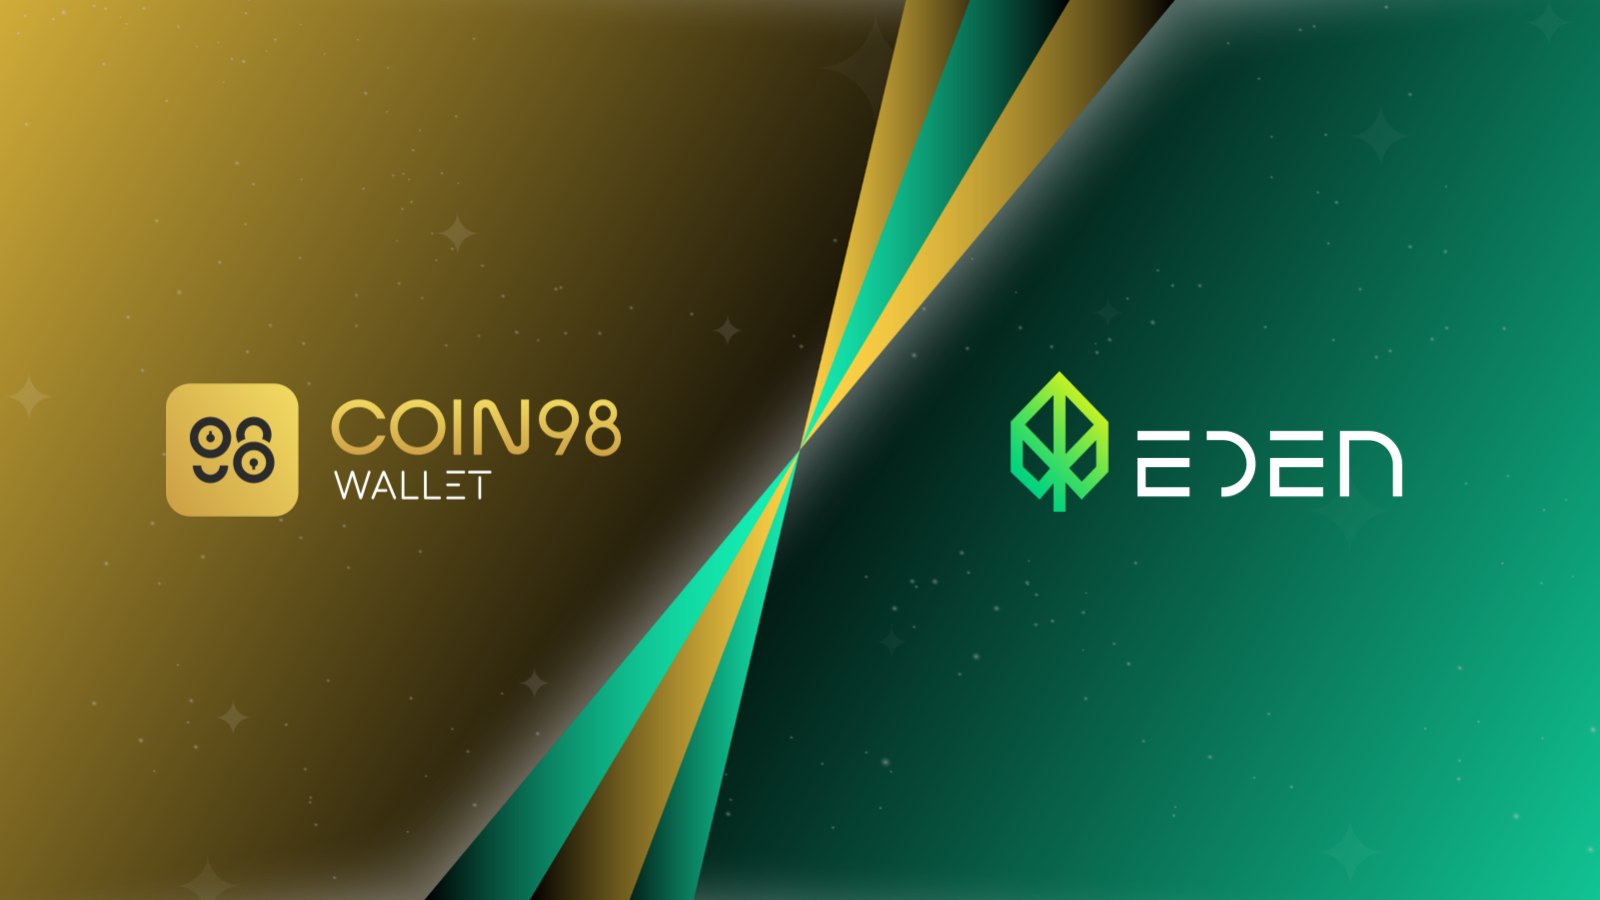 Coin98 Wallet officially announces the integration of Eden Network